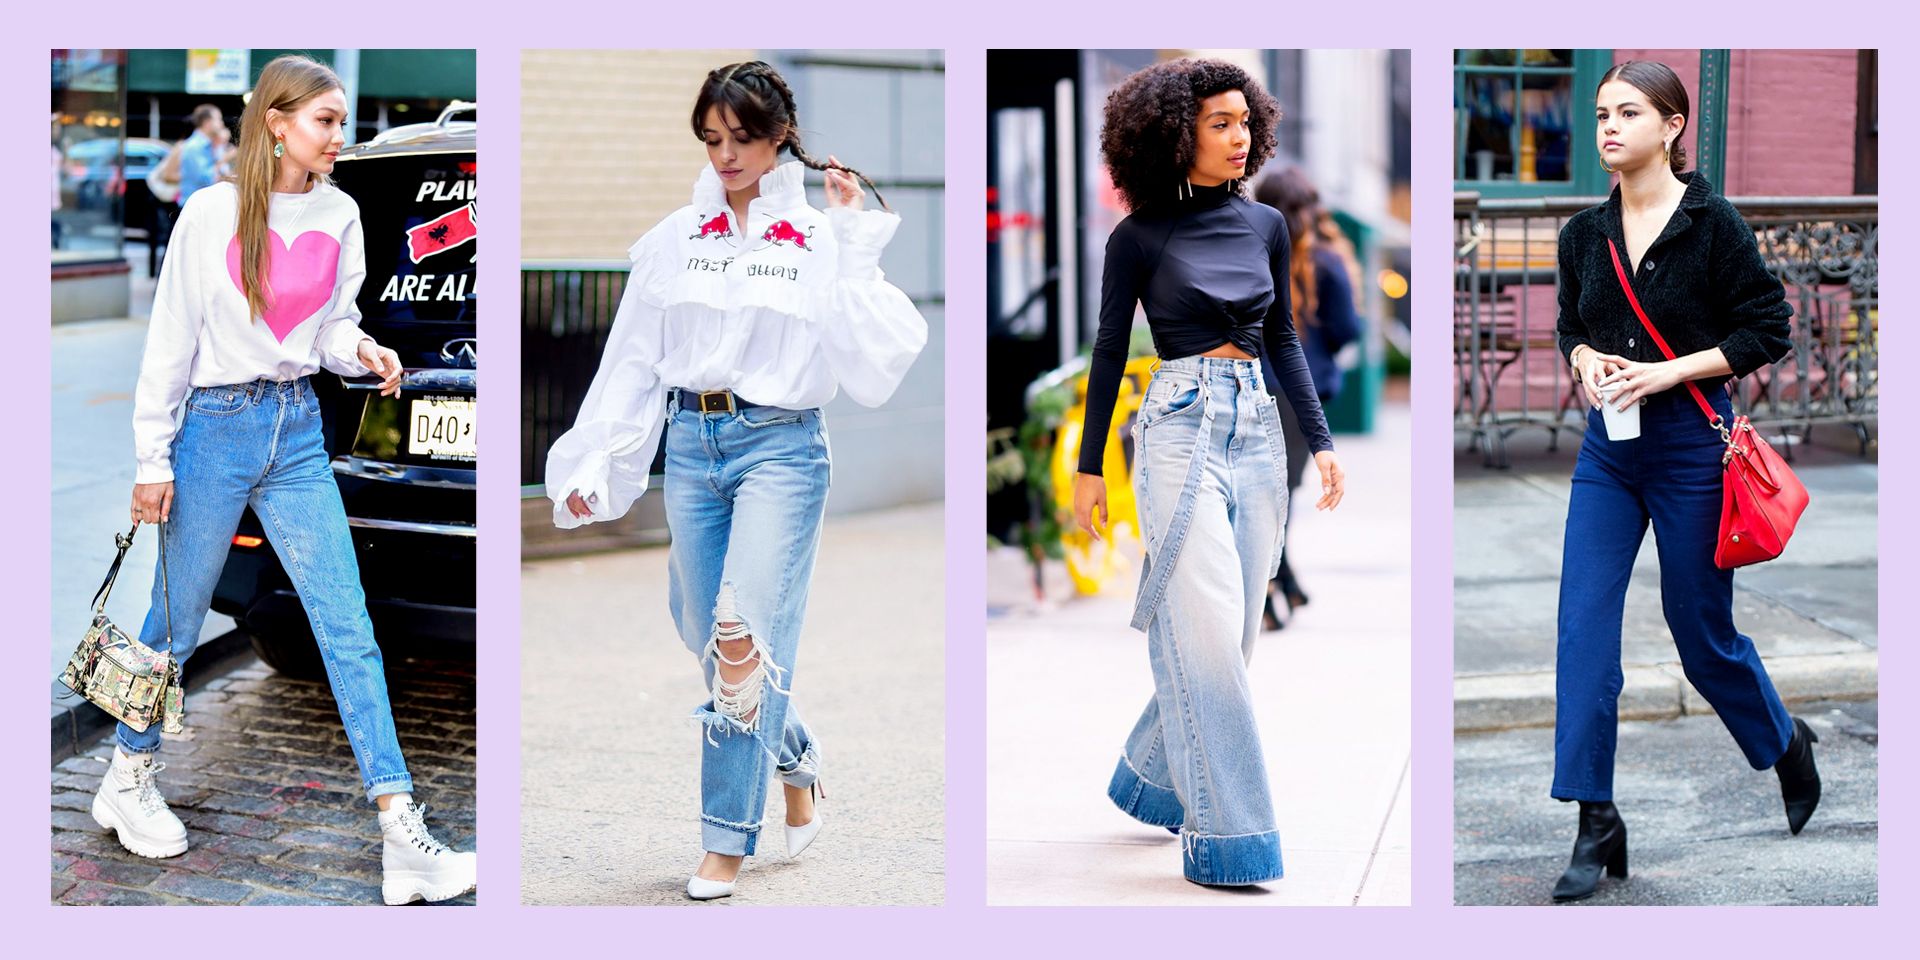 Women's Jeans | ZARA United States